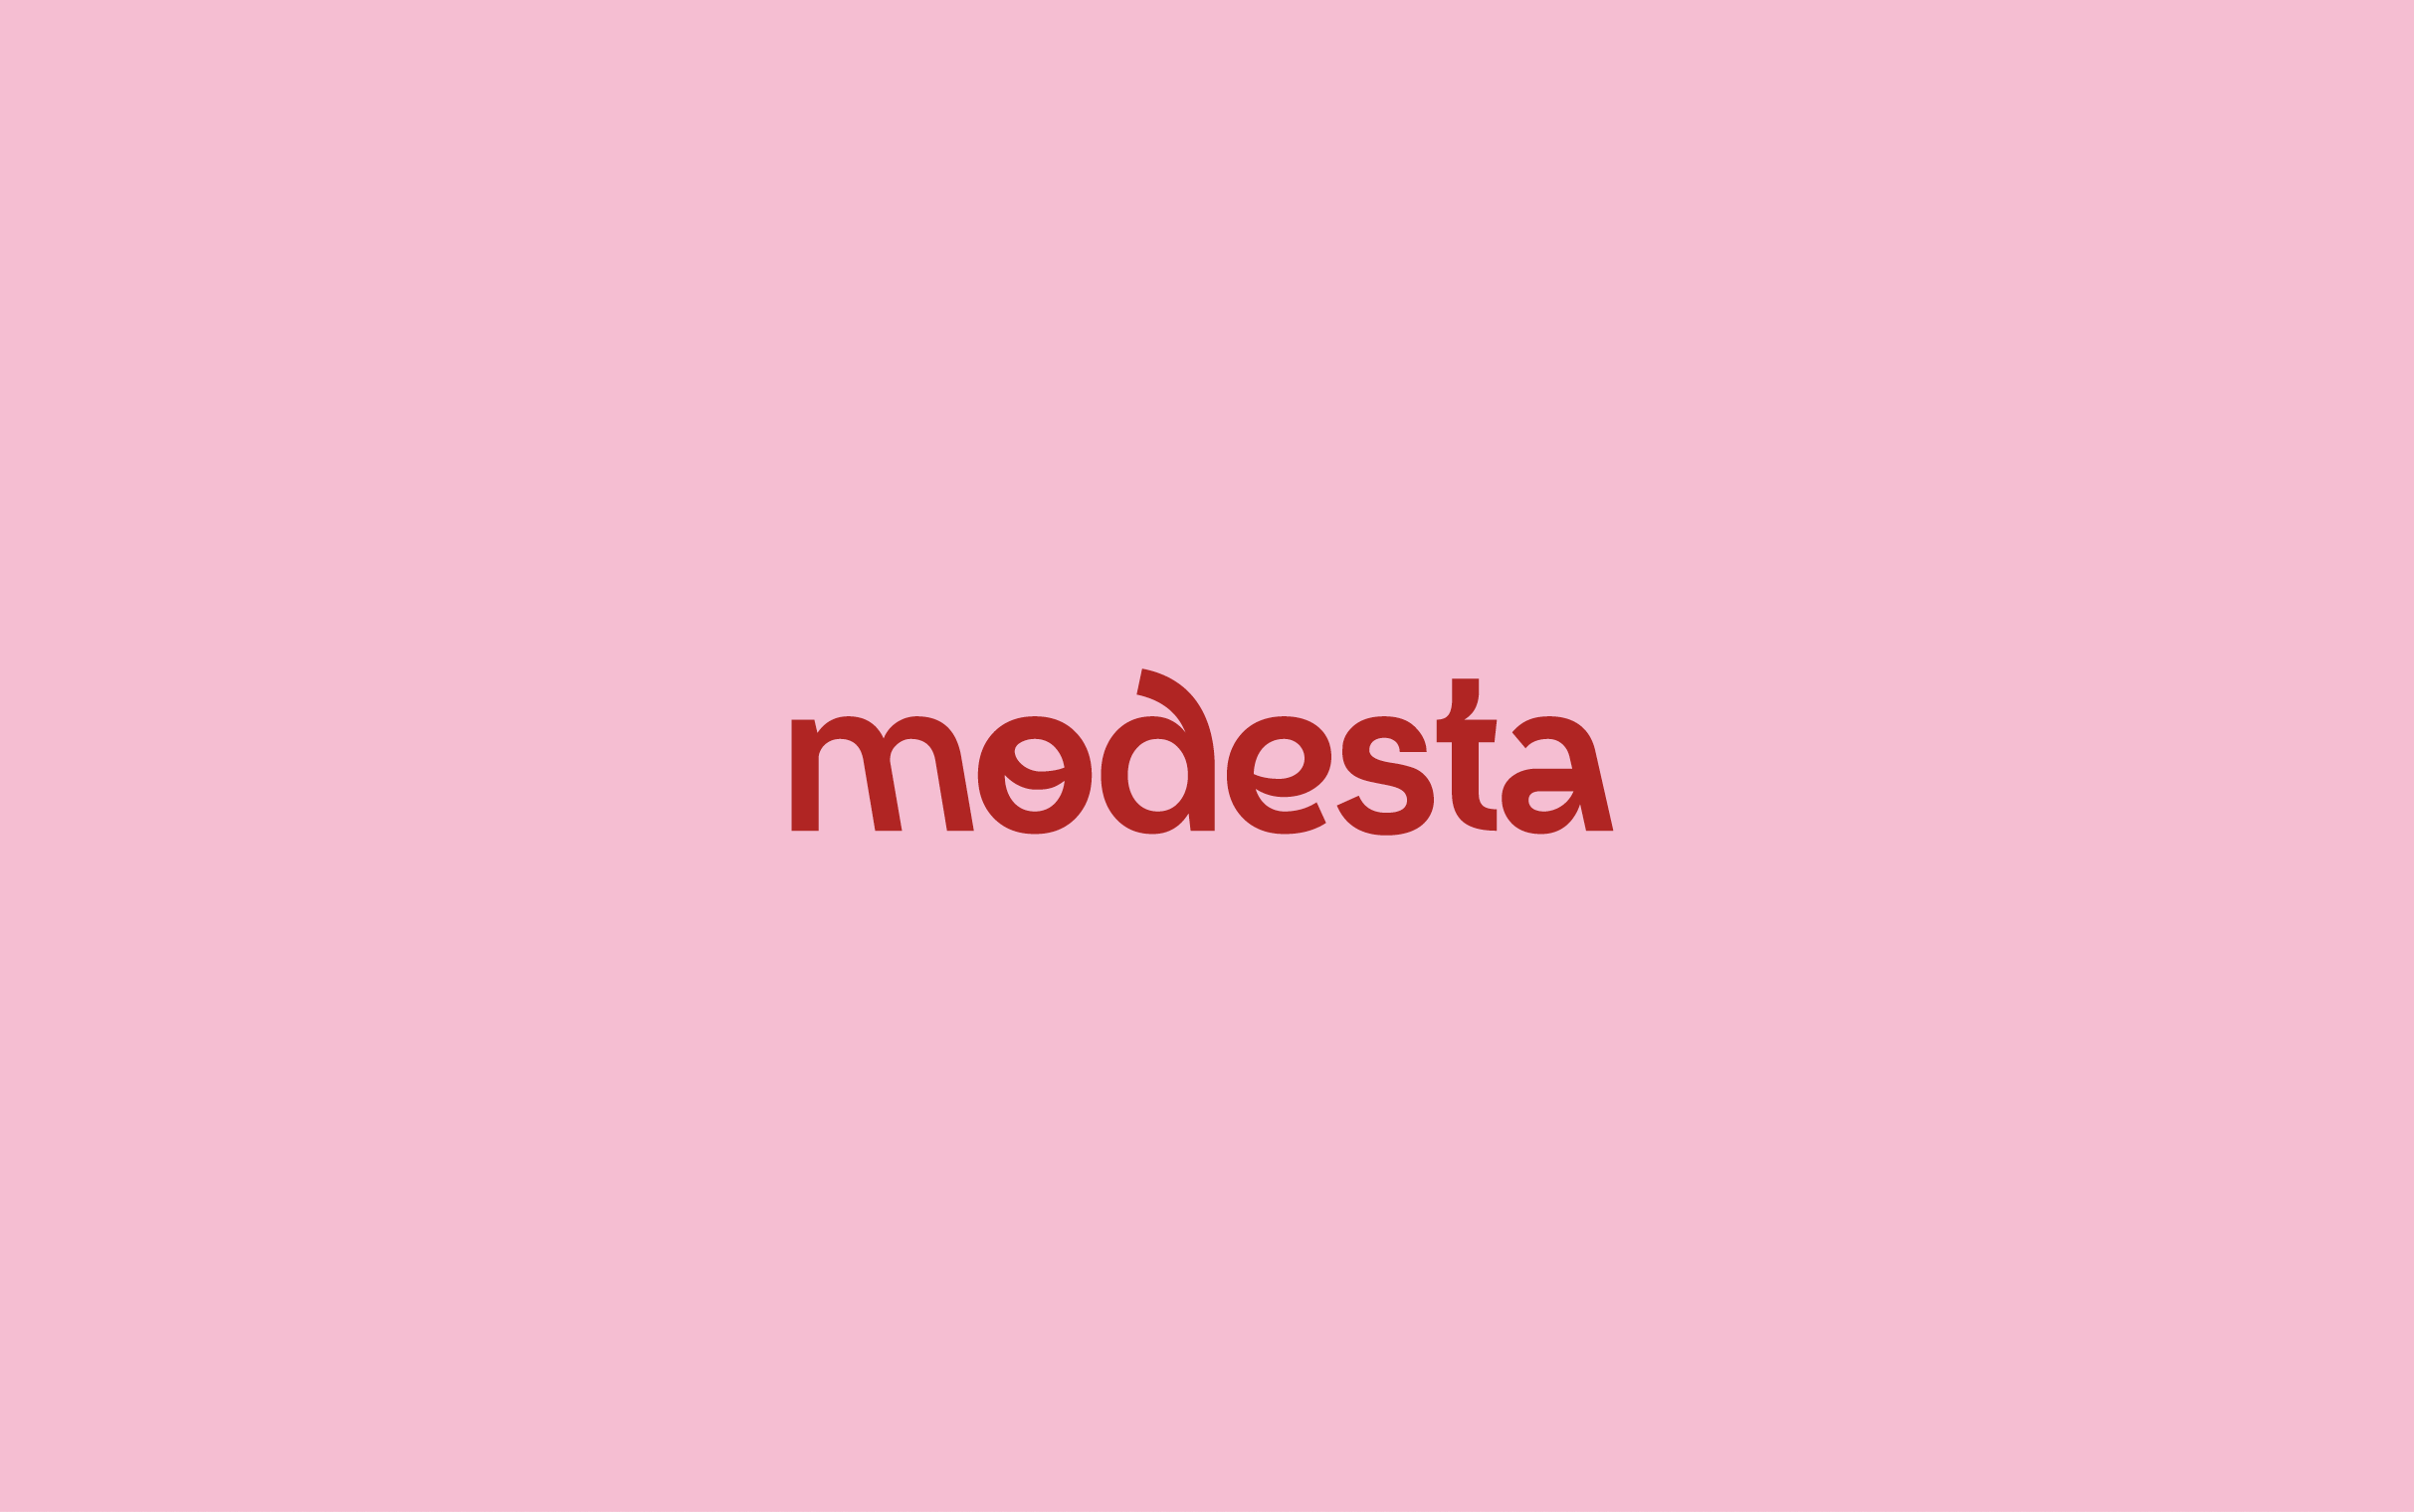 Modesta Vegana Mercado e Café Desenvolvimento de naming, posicionamento estratégico e identidade visual.  - Modesta